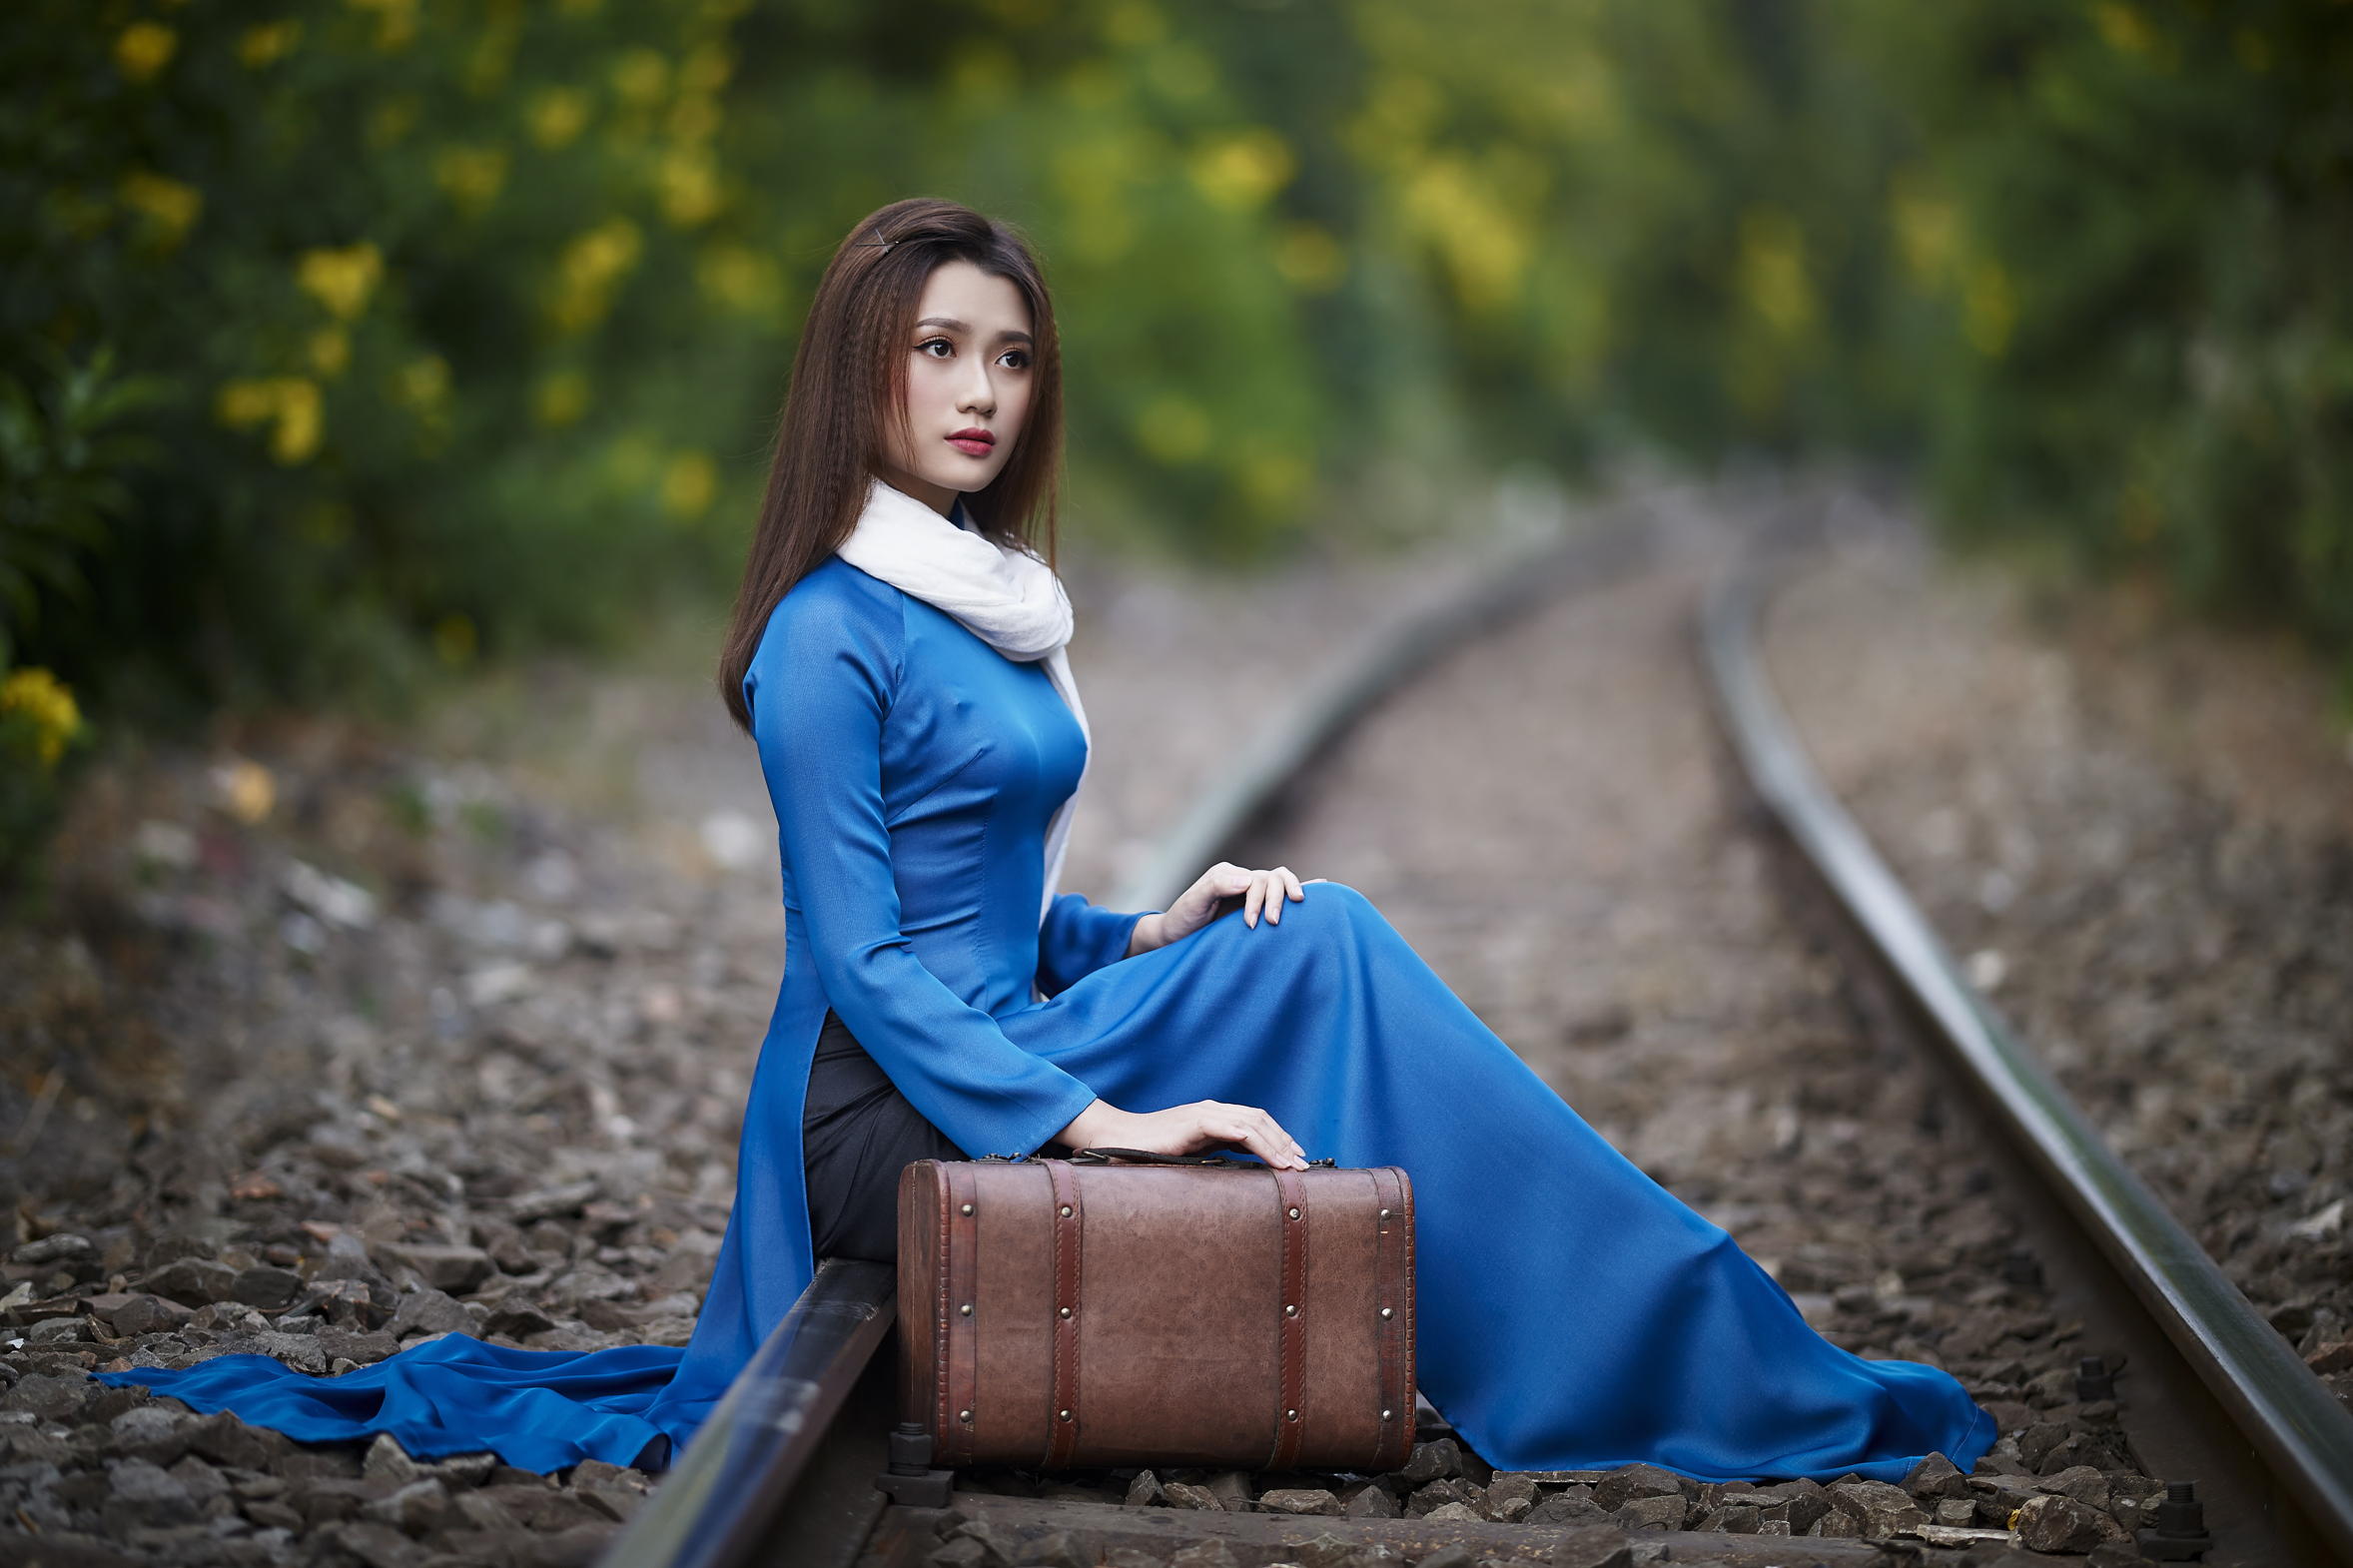 Asian Model Women Long Hair Dark Hair Depth Of Field Women Outdoors Sitting Railroad Track Suitcase  2356x1570